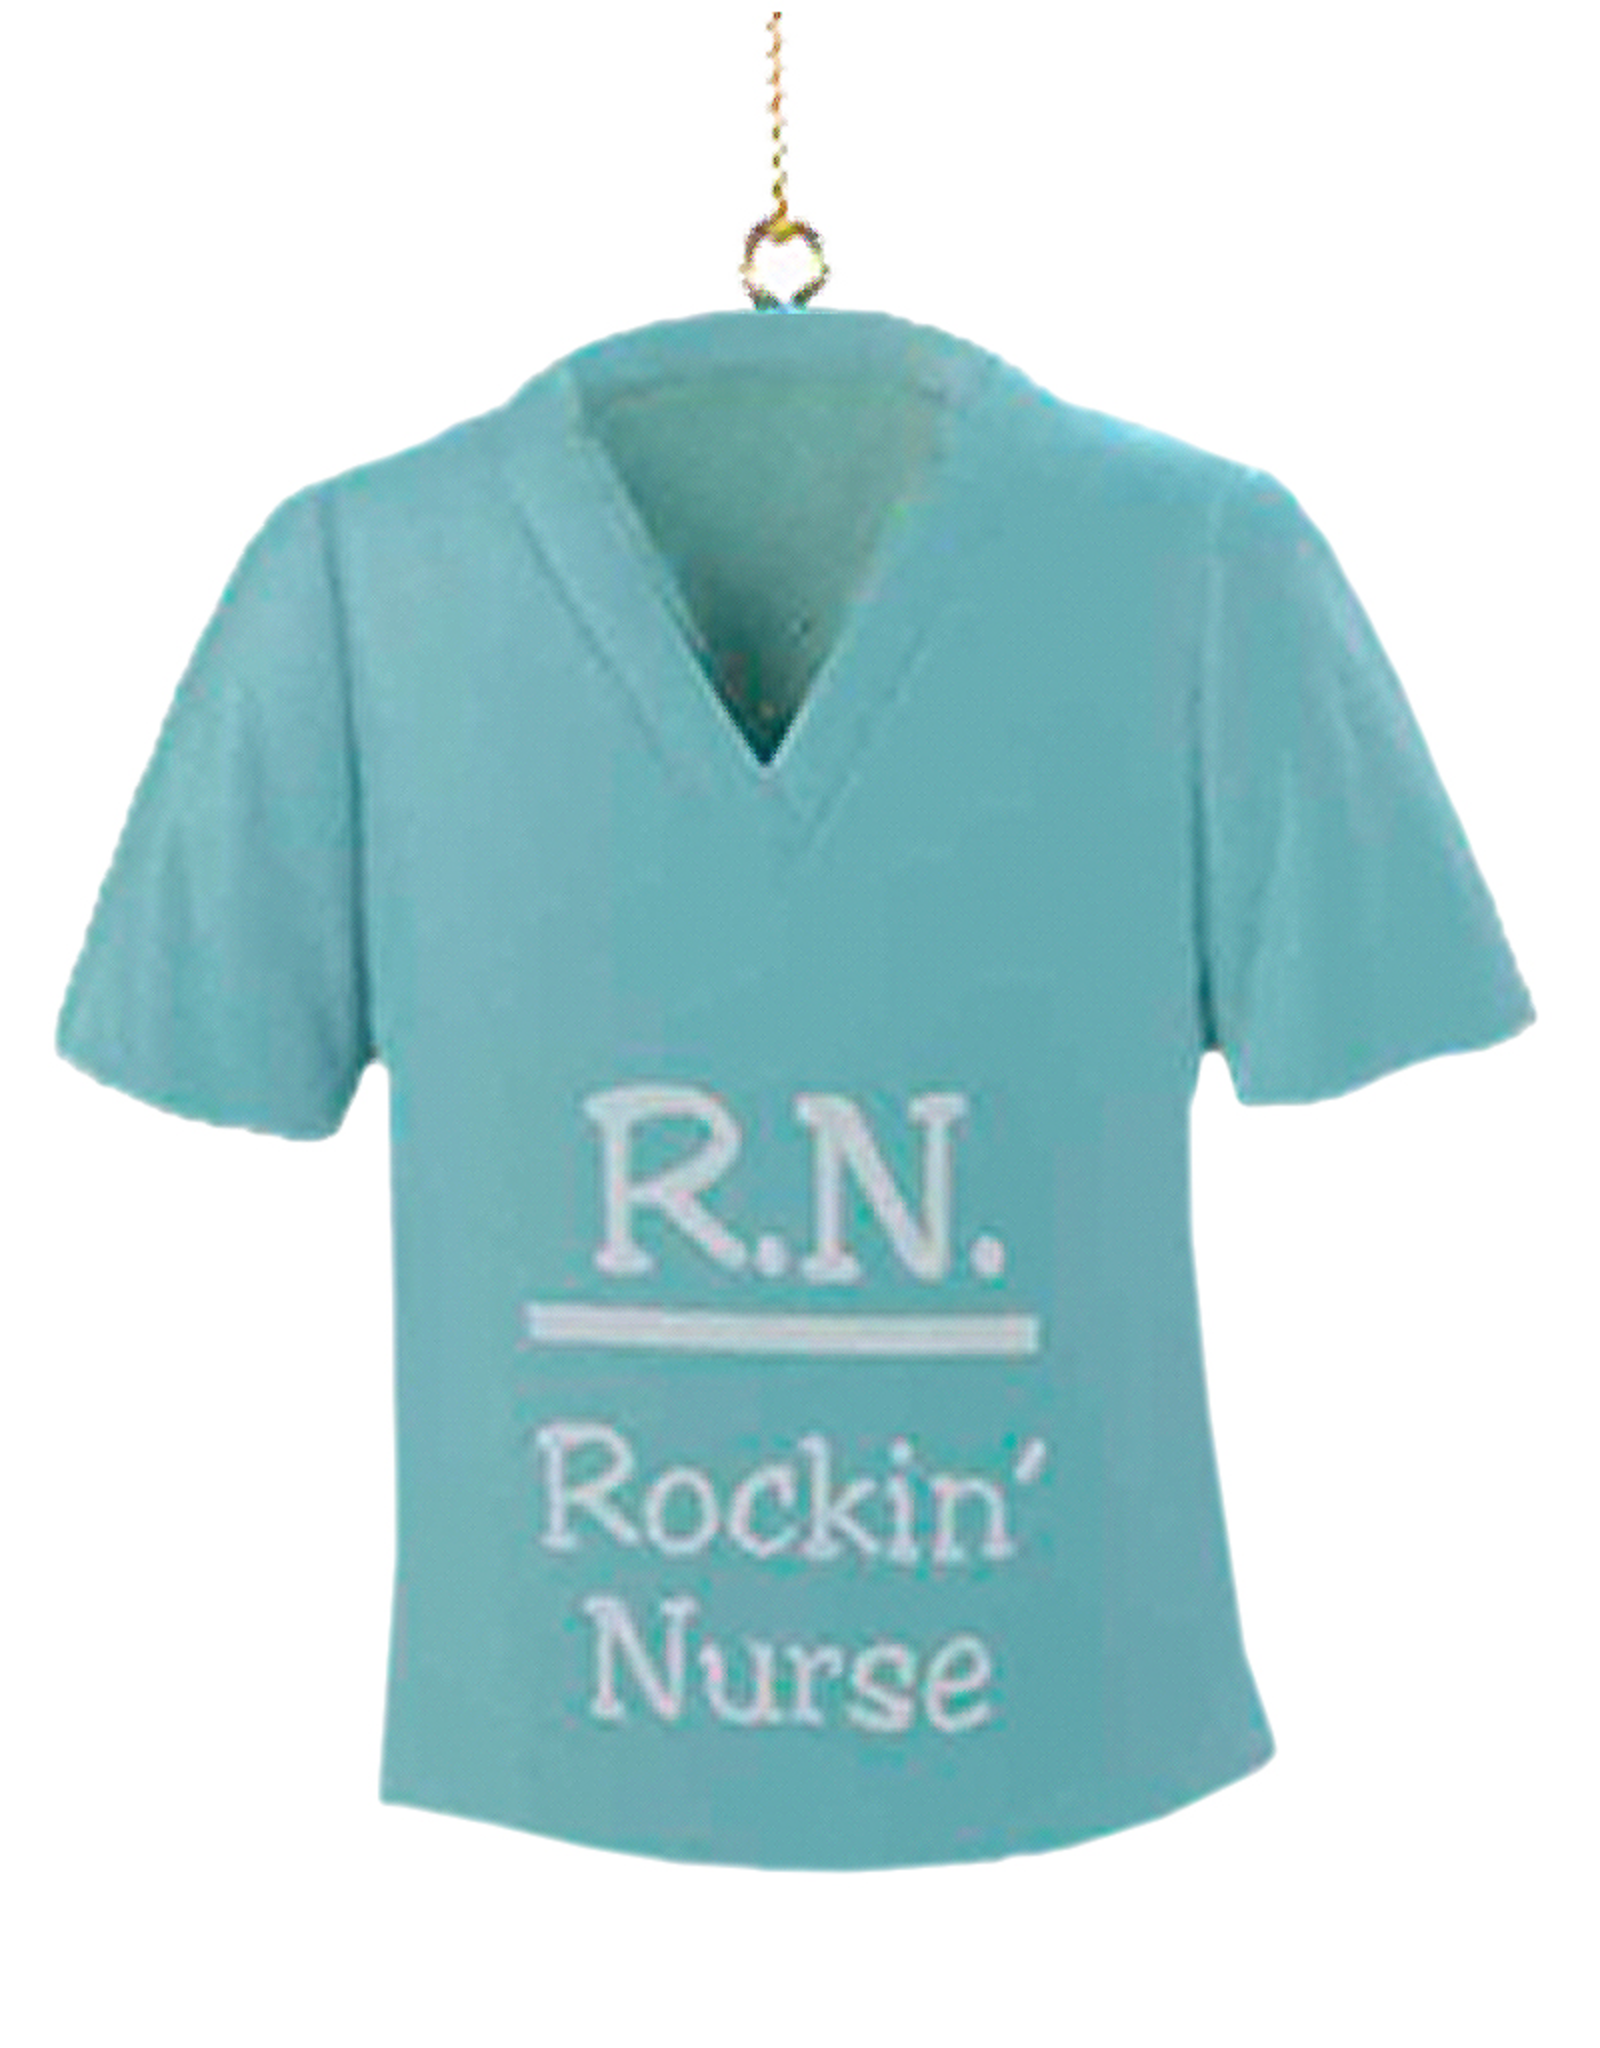 Kurt Adler Christmas Medical Scrub Ornament RN Rockin Nurse